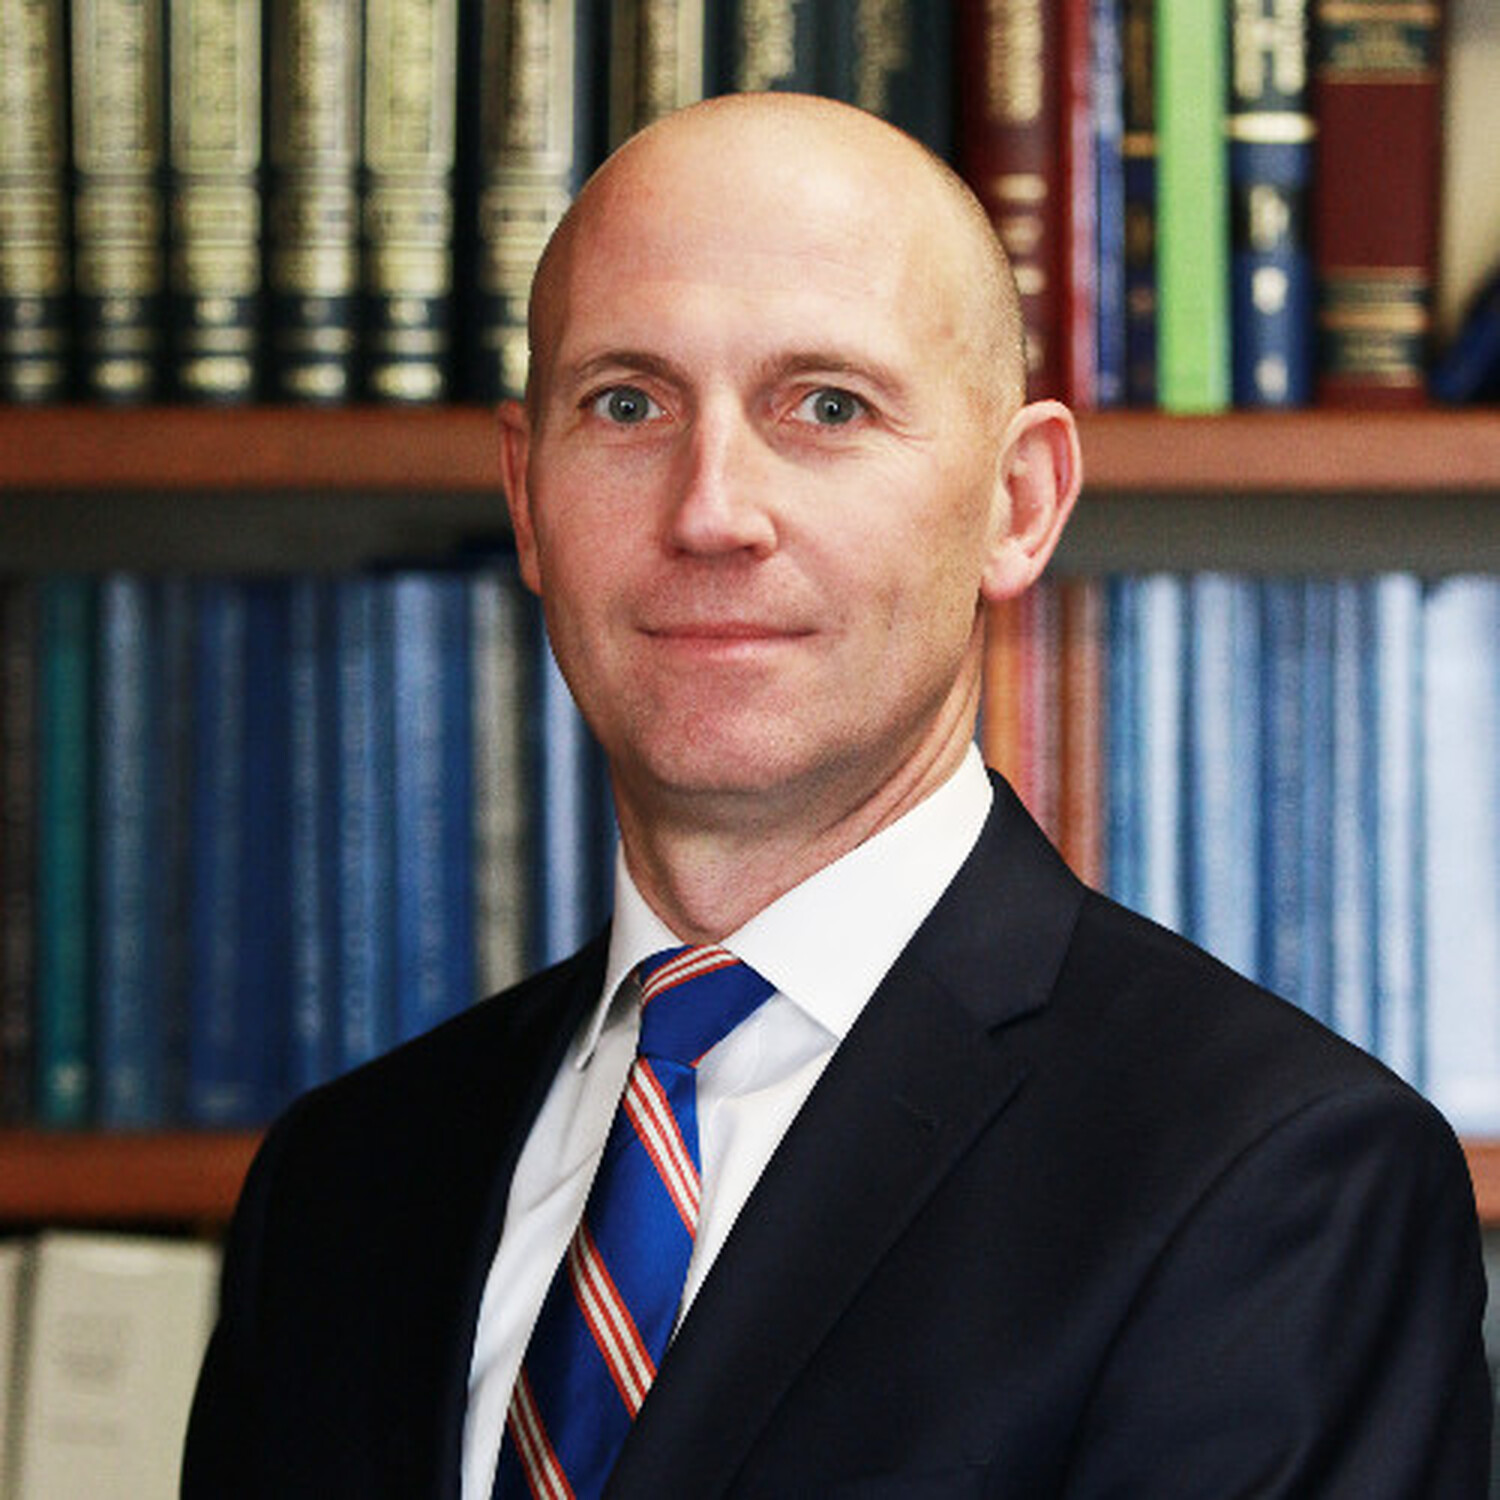 Alumni Q&A: Neil Fulton ’97, Dean of the University of South Dakota Law School